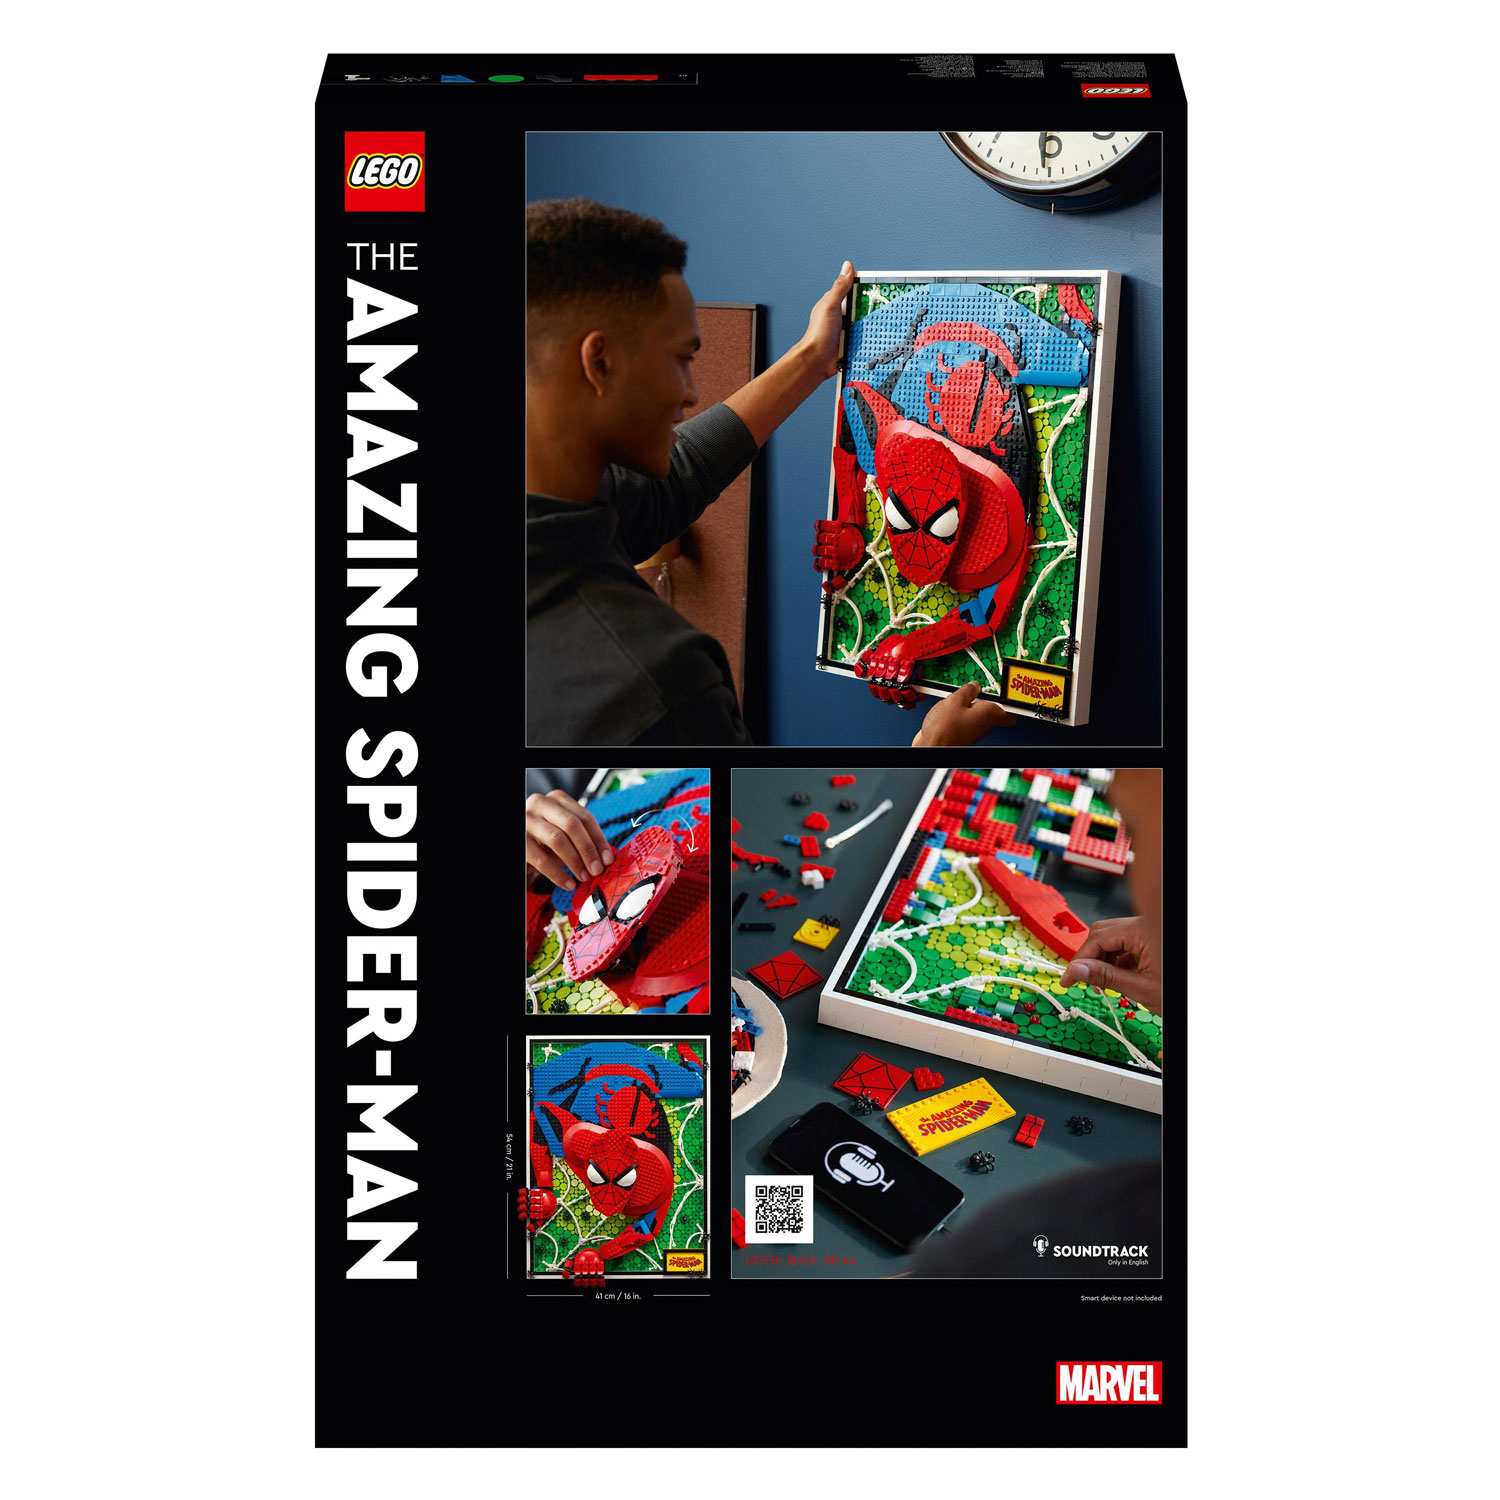 LEGO Art 31209 L'incroyable Spider-Man